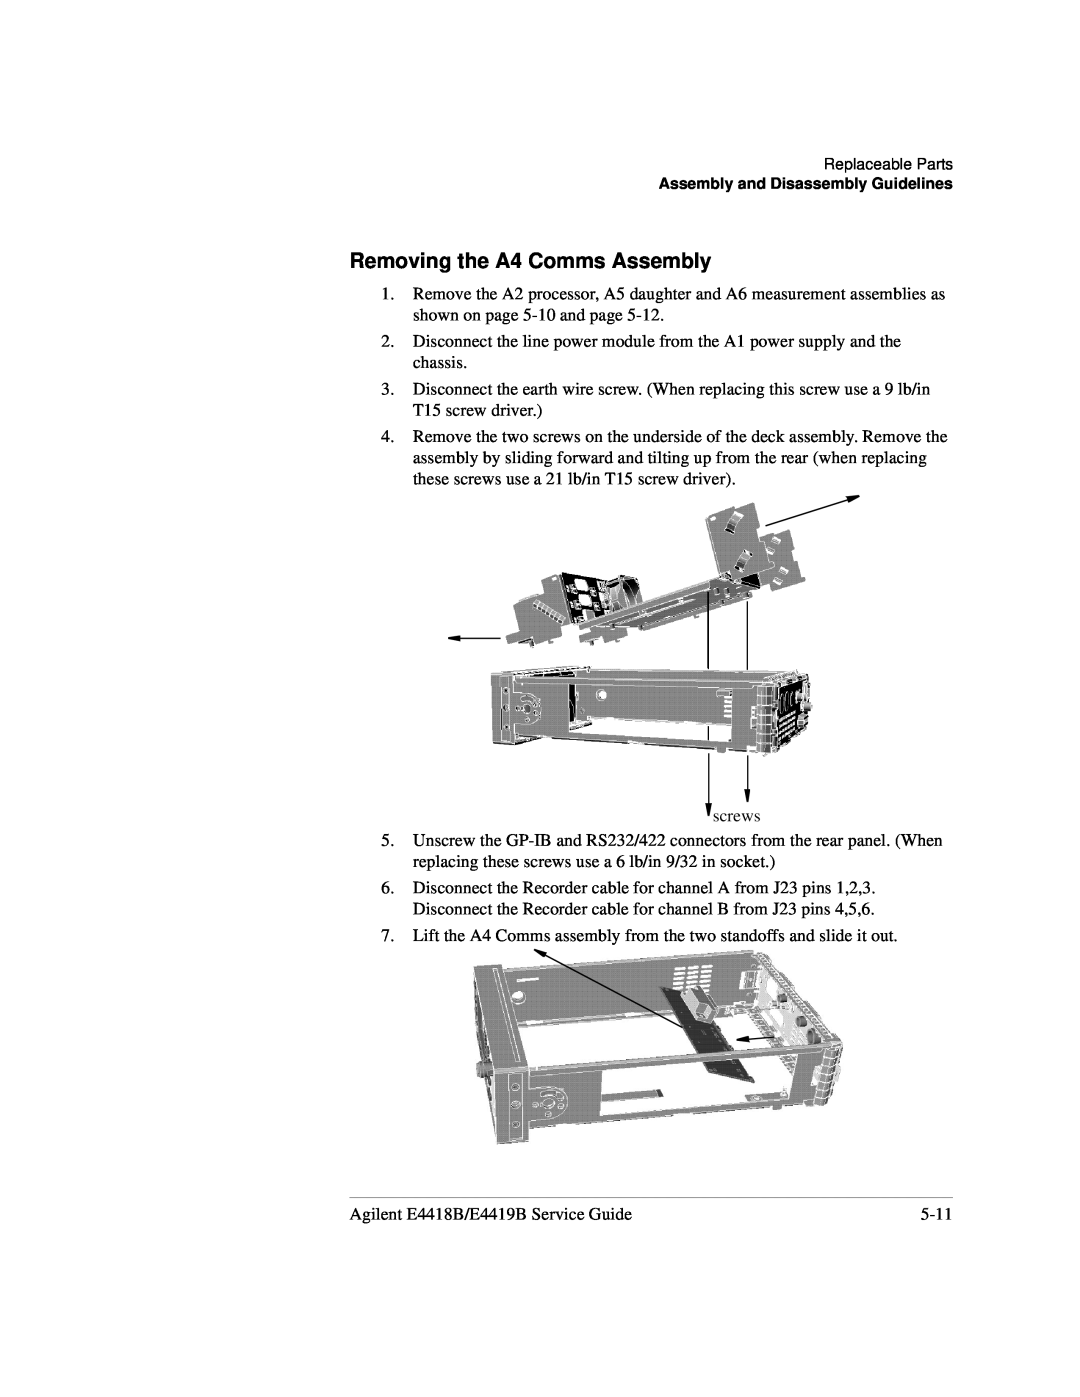 Agilent Technologies e4419b, e4418b manual Removing the A4 Comms Assembly, screws 